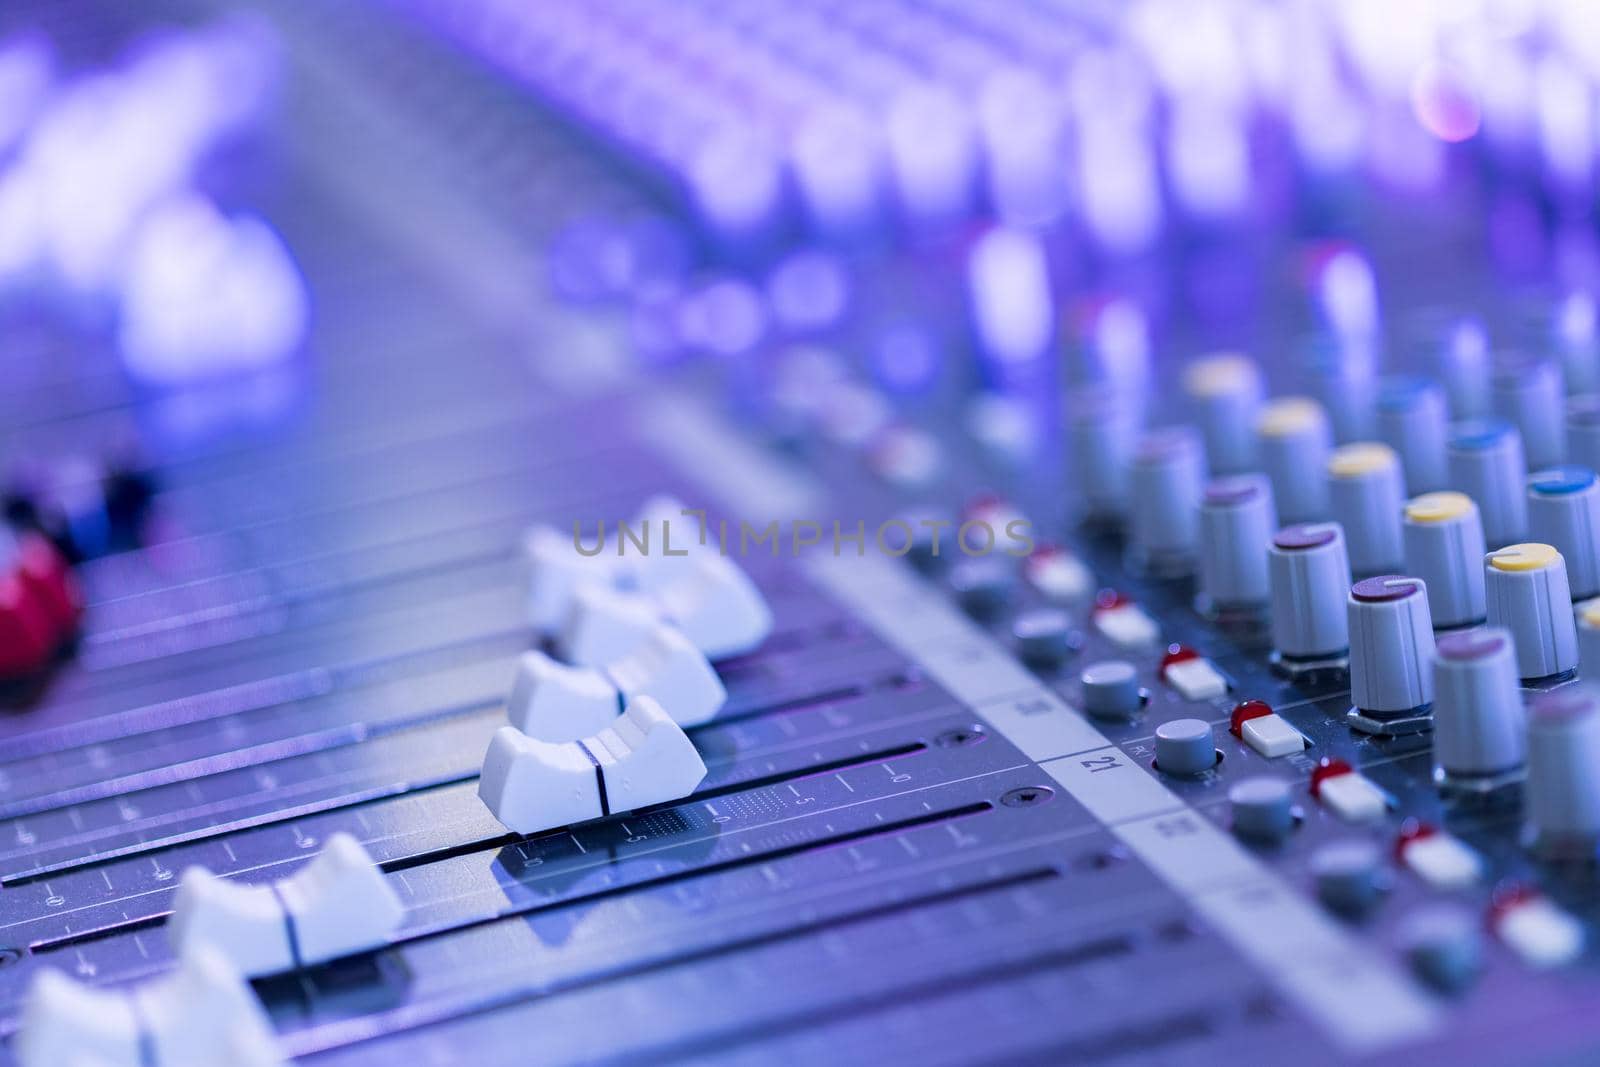 Professional music production in a sound recording studio, mixer desk